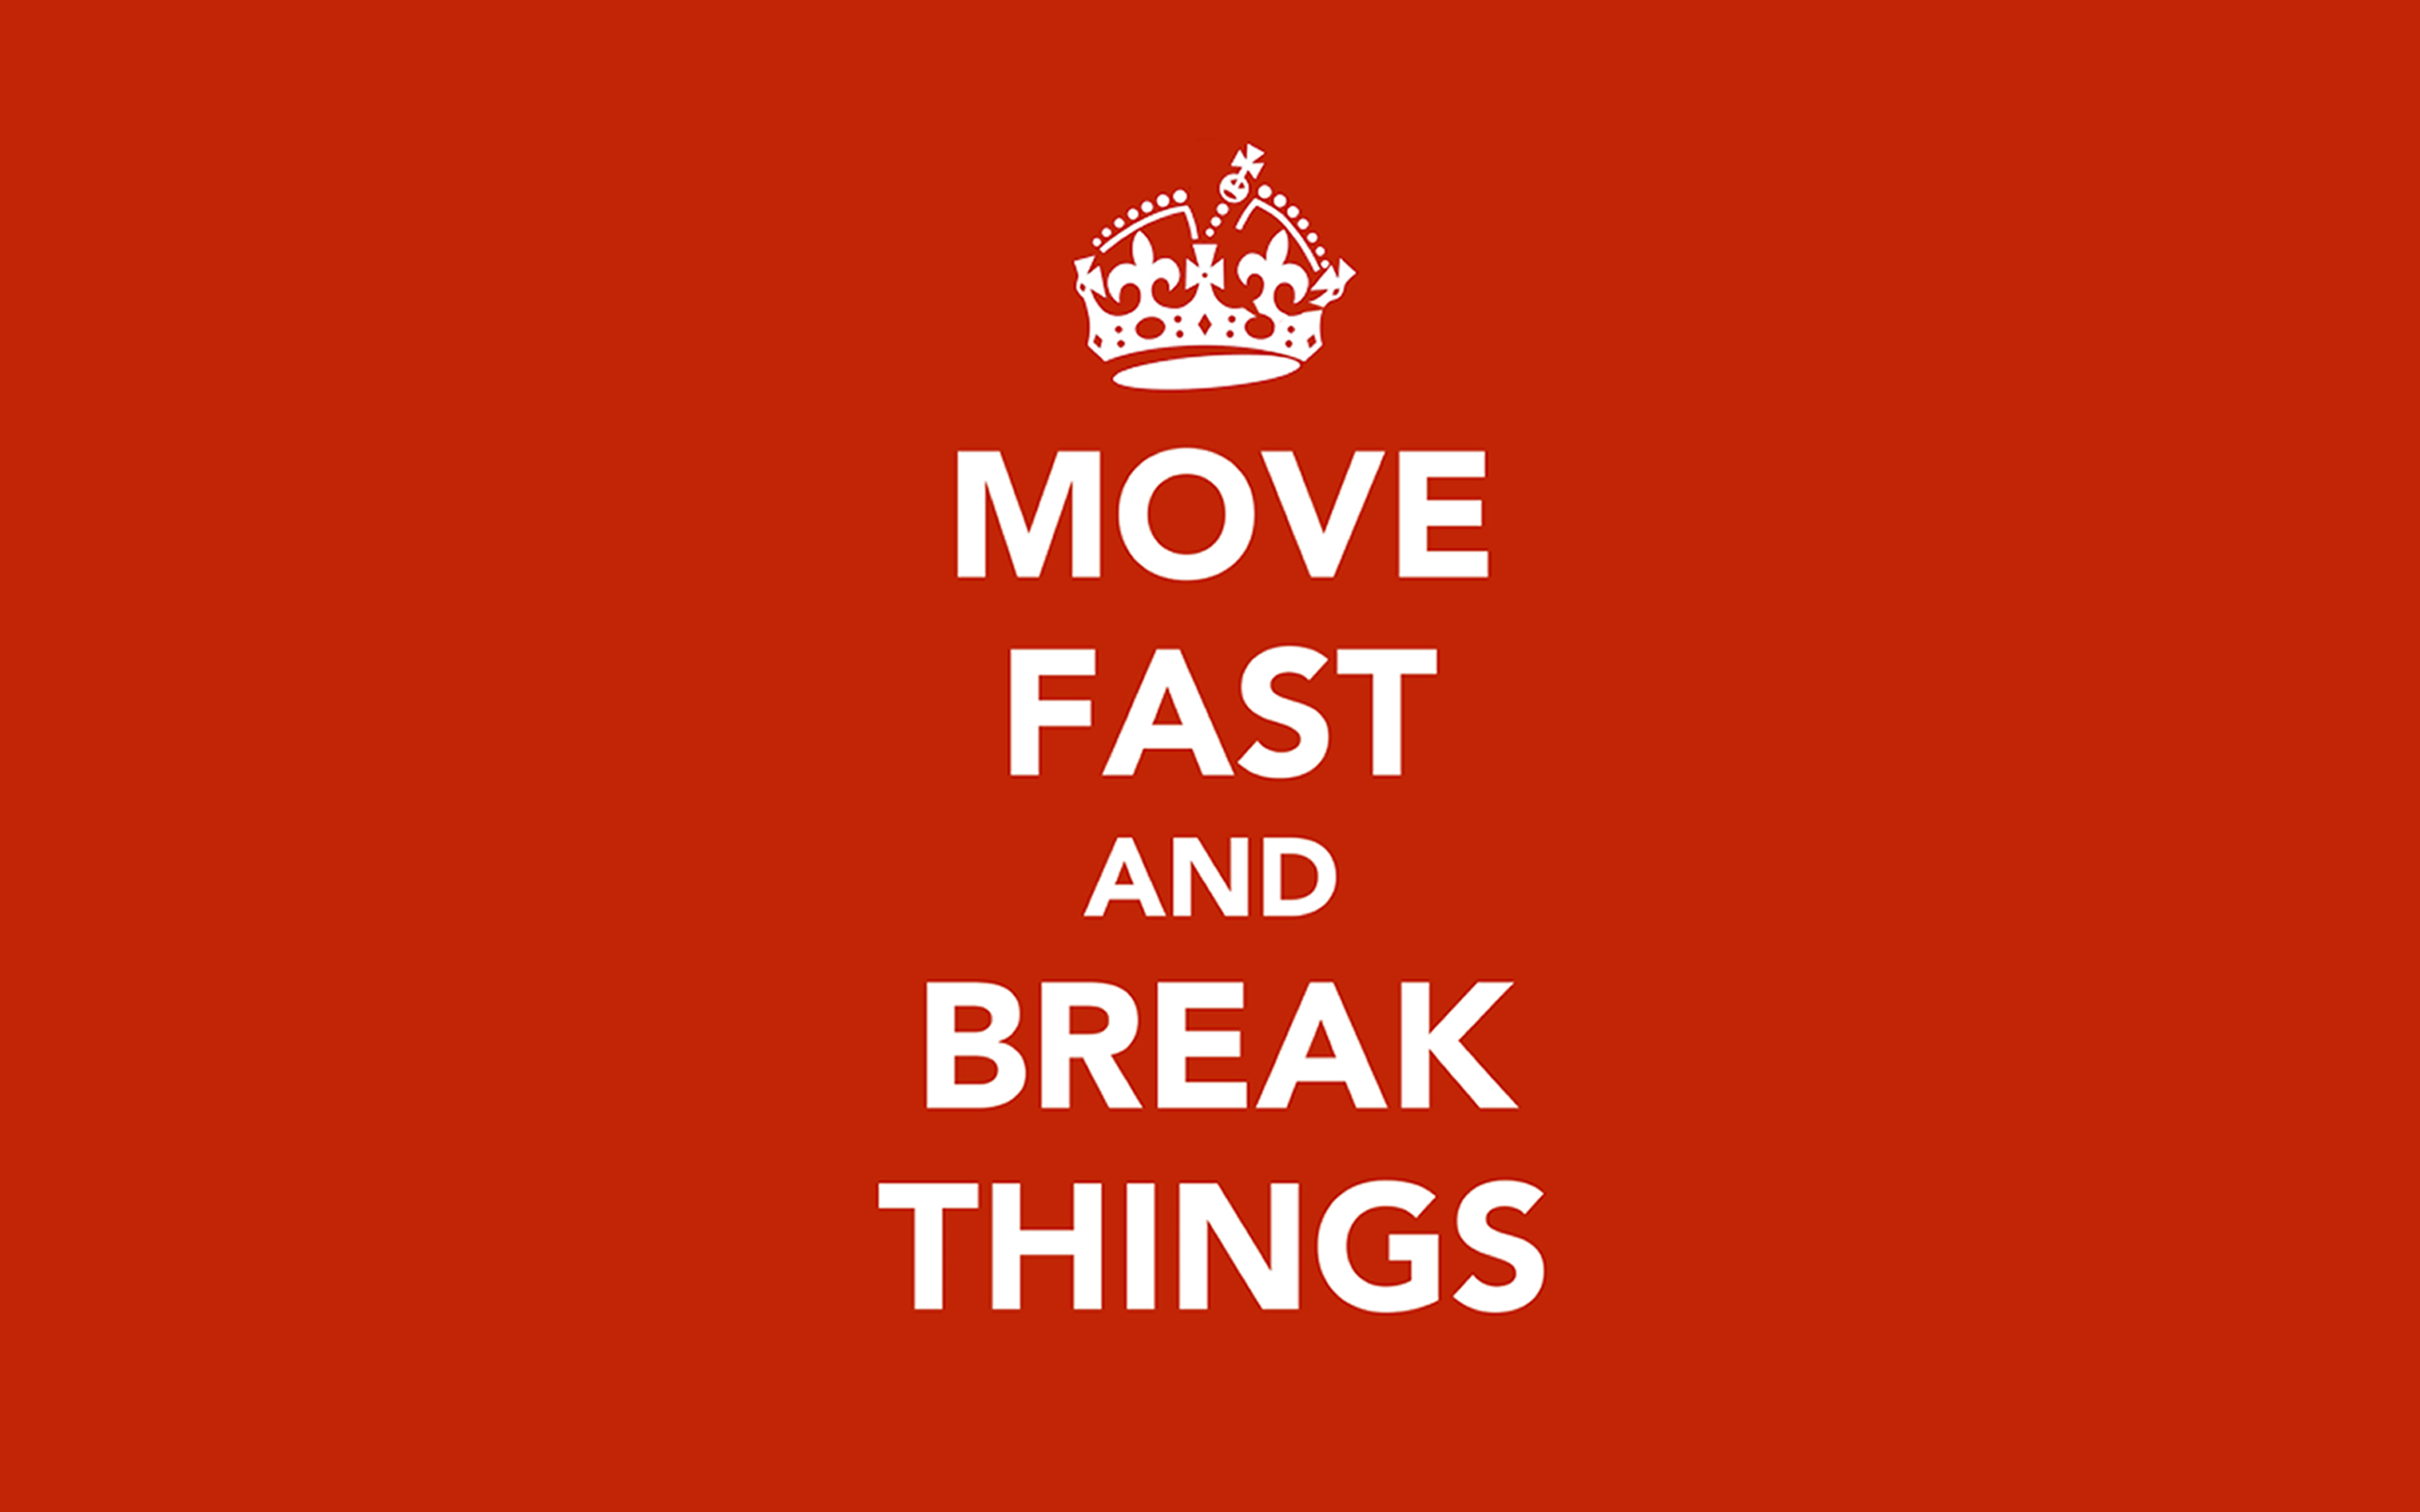 move_fast_and_break_things_by_kefirbertulli-d4r45k7.jpg